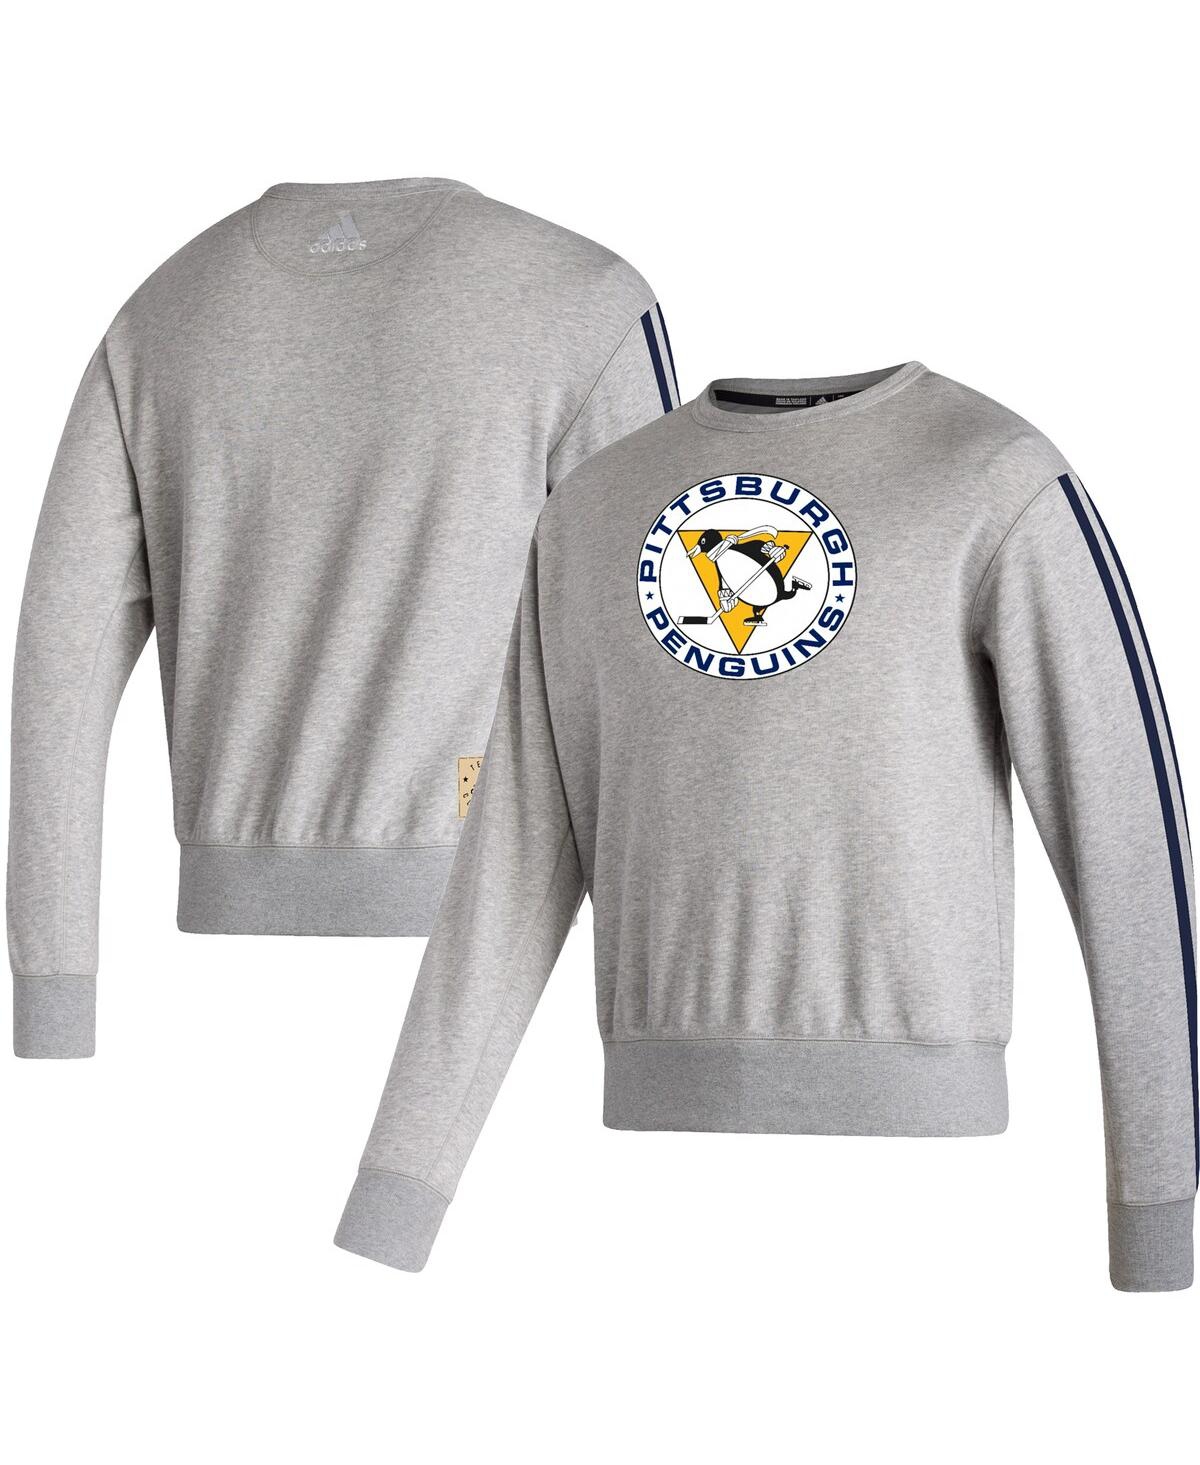 Shop Adidas Originals Men's Adidas Heathered Gray Pittsburgh Penguins Team Classics Vintage-like Pullover Sweatshirt